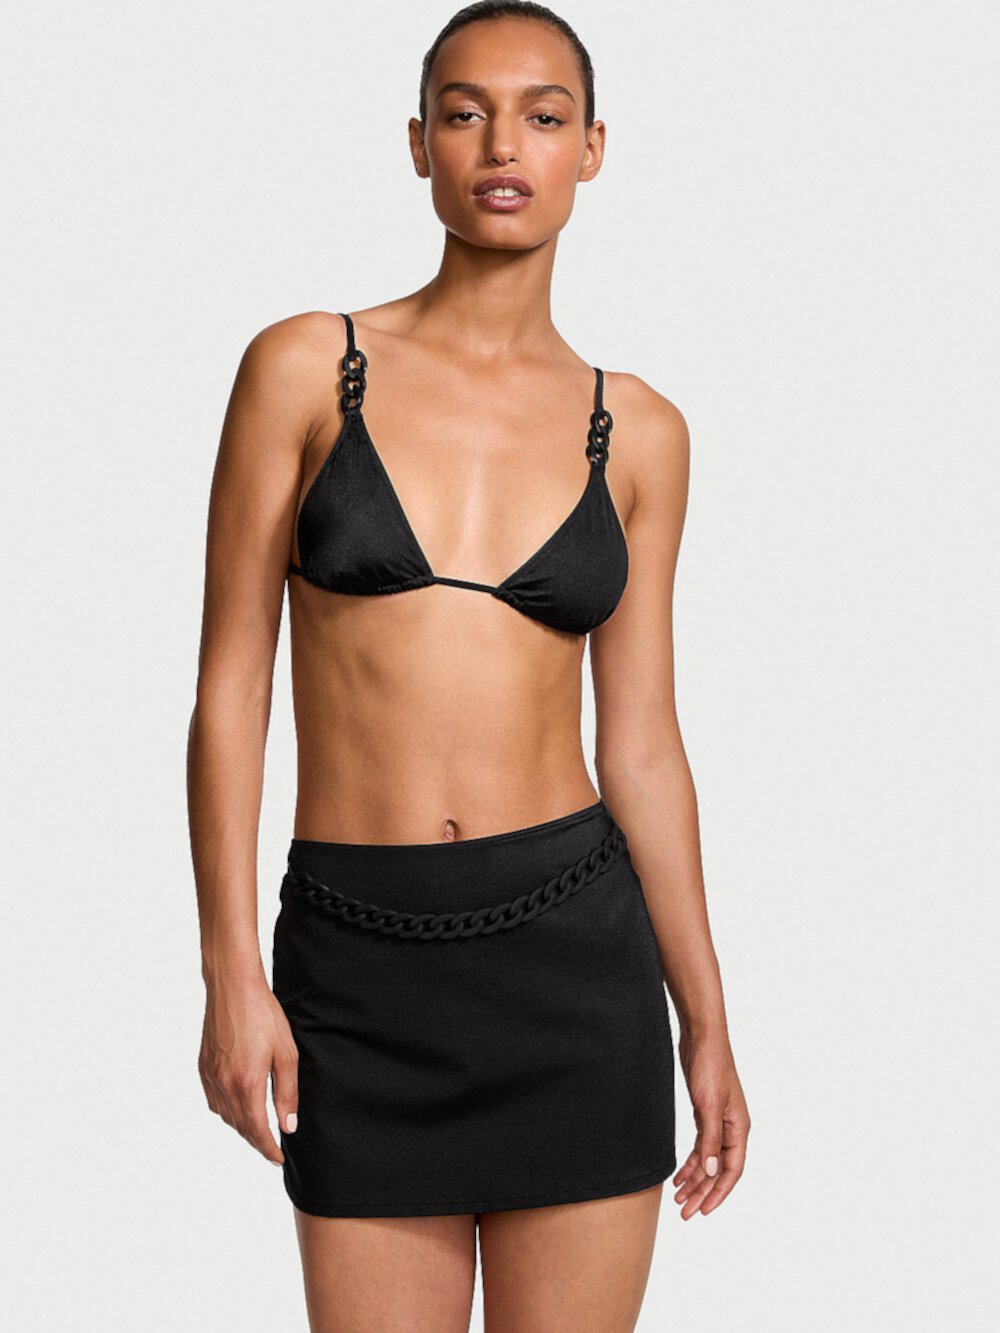 New Style! Chain-Link Mini Cover-Up Skirt Victoria's Secret Swim